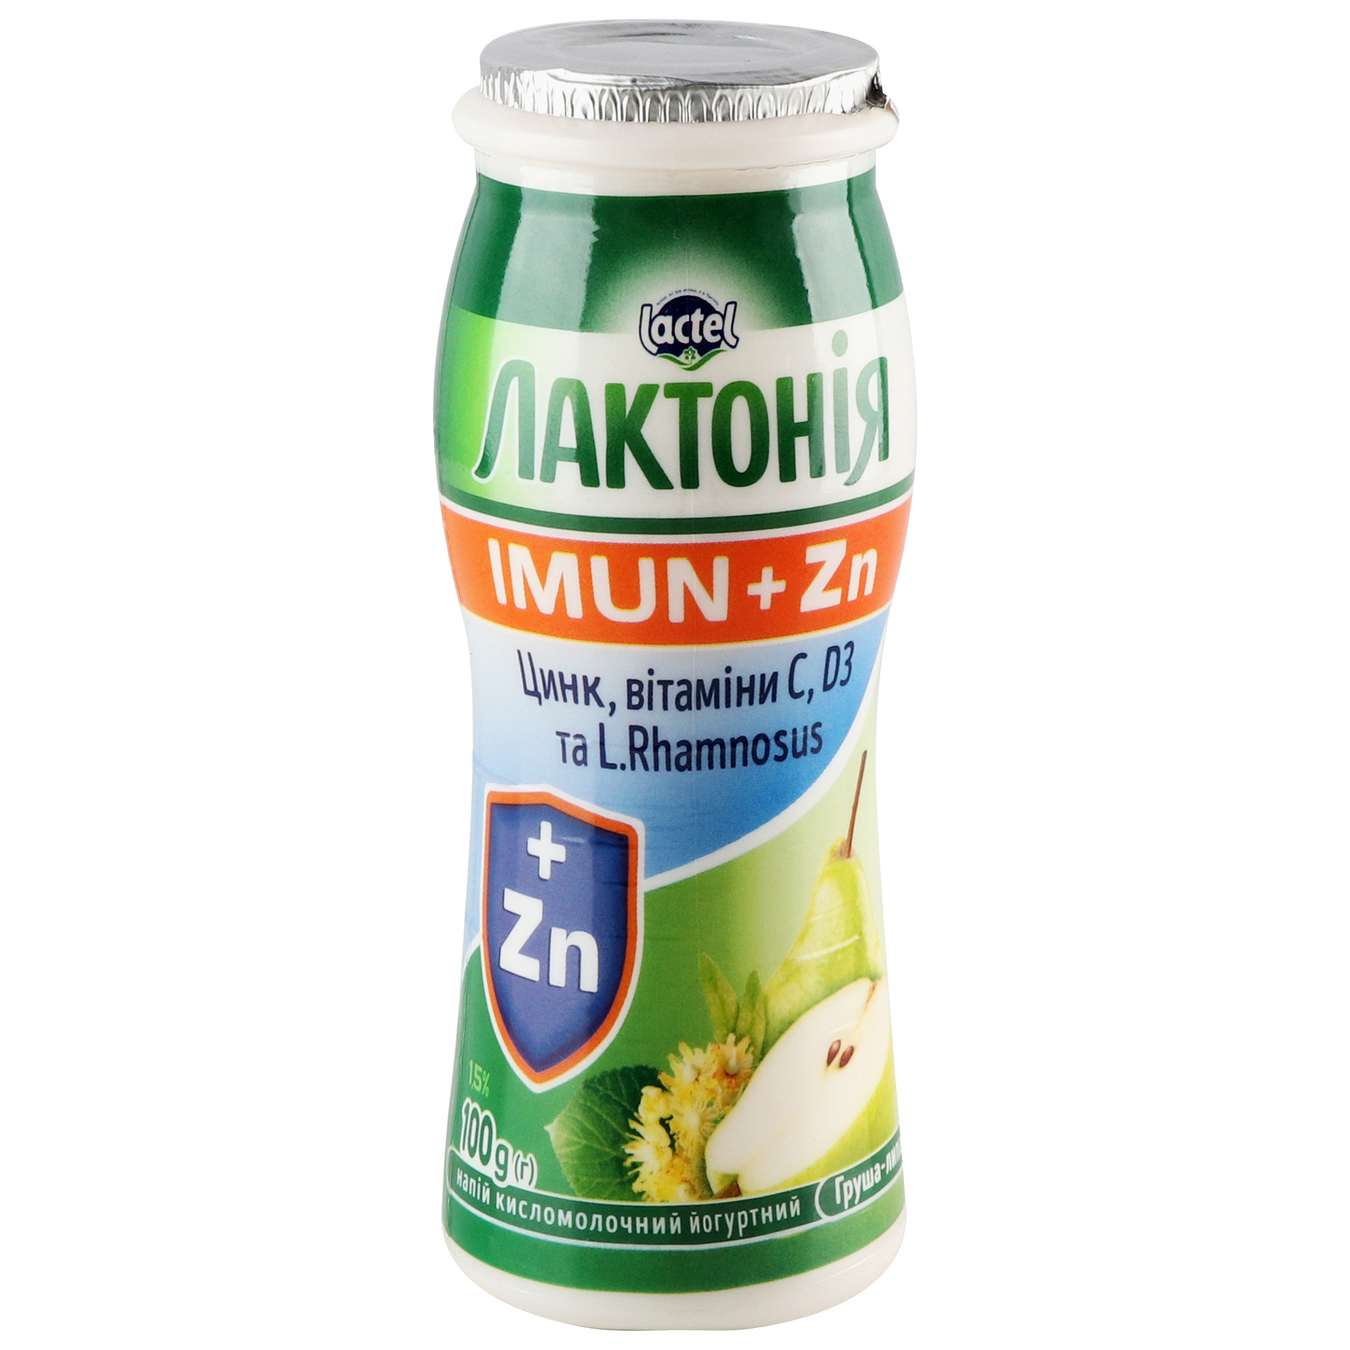 Drink Lactonia sour milk yogurt Imun + pear-linden 1.5% 100g bottle 5